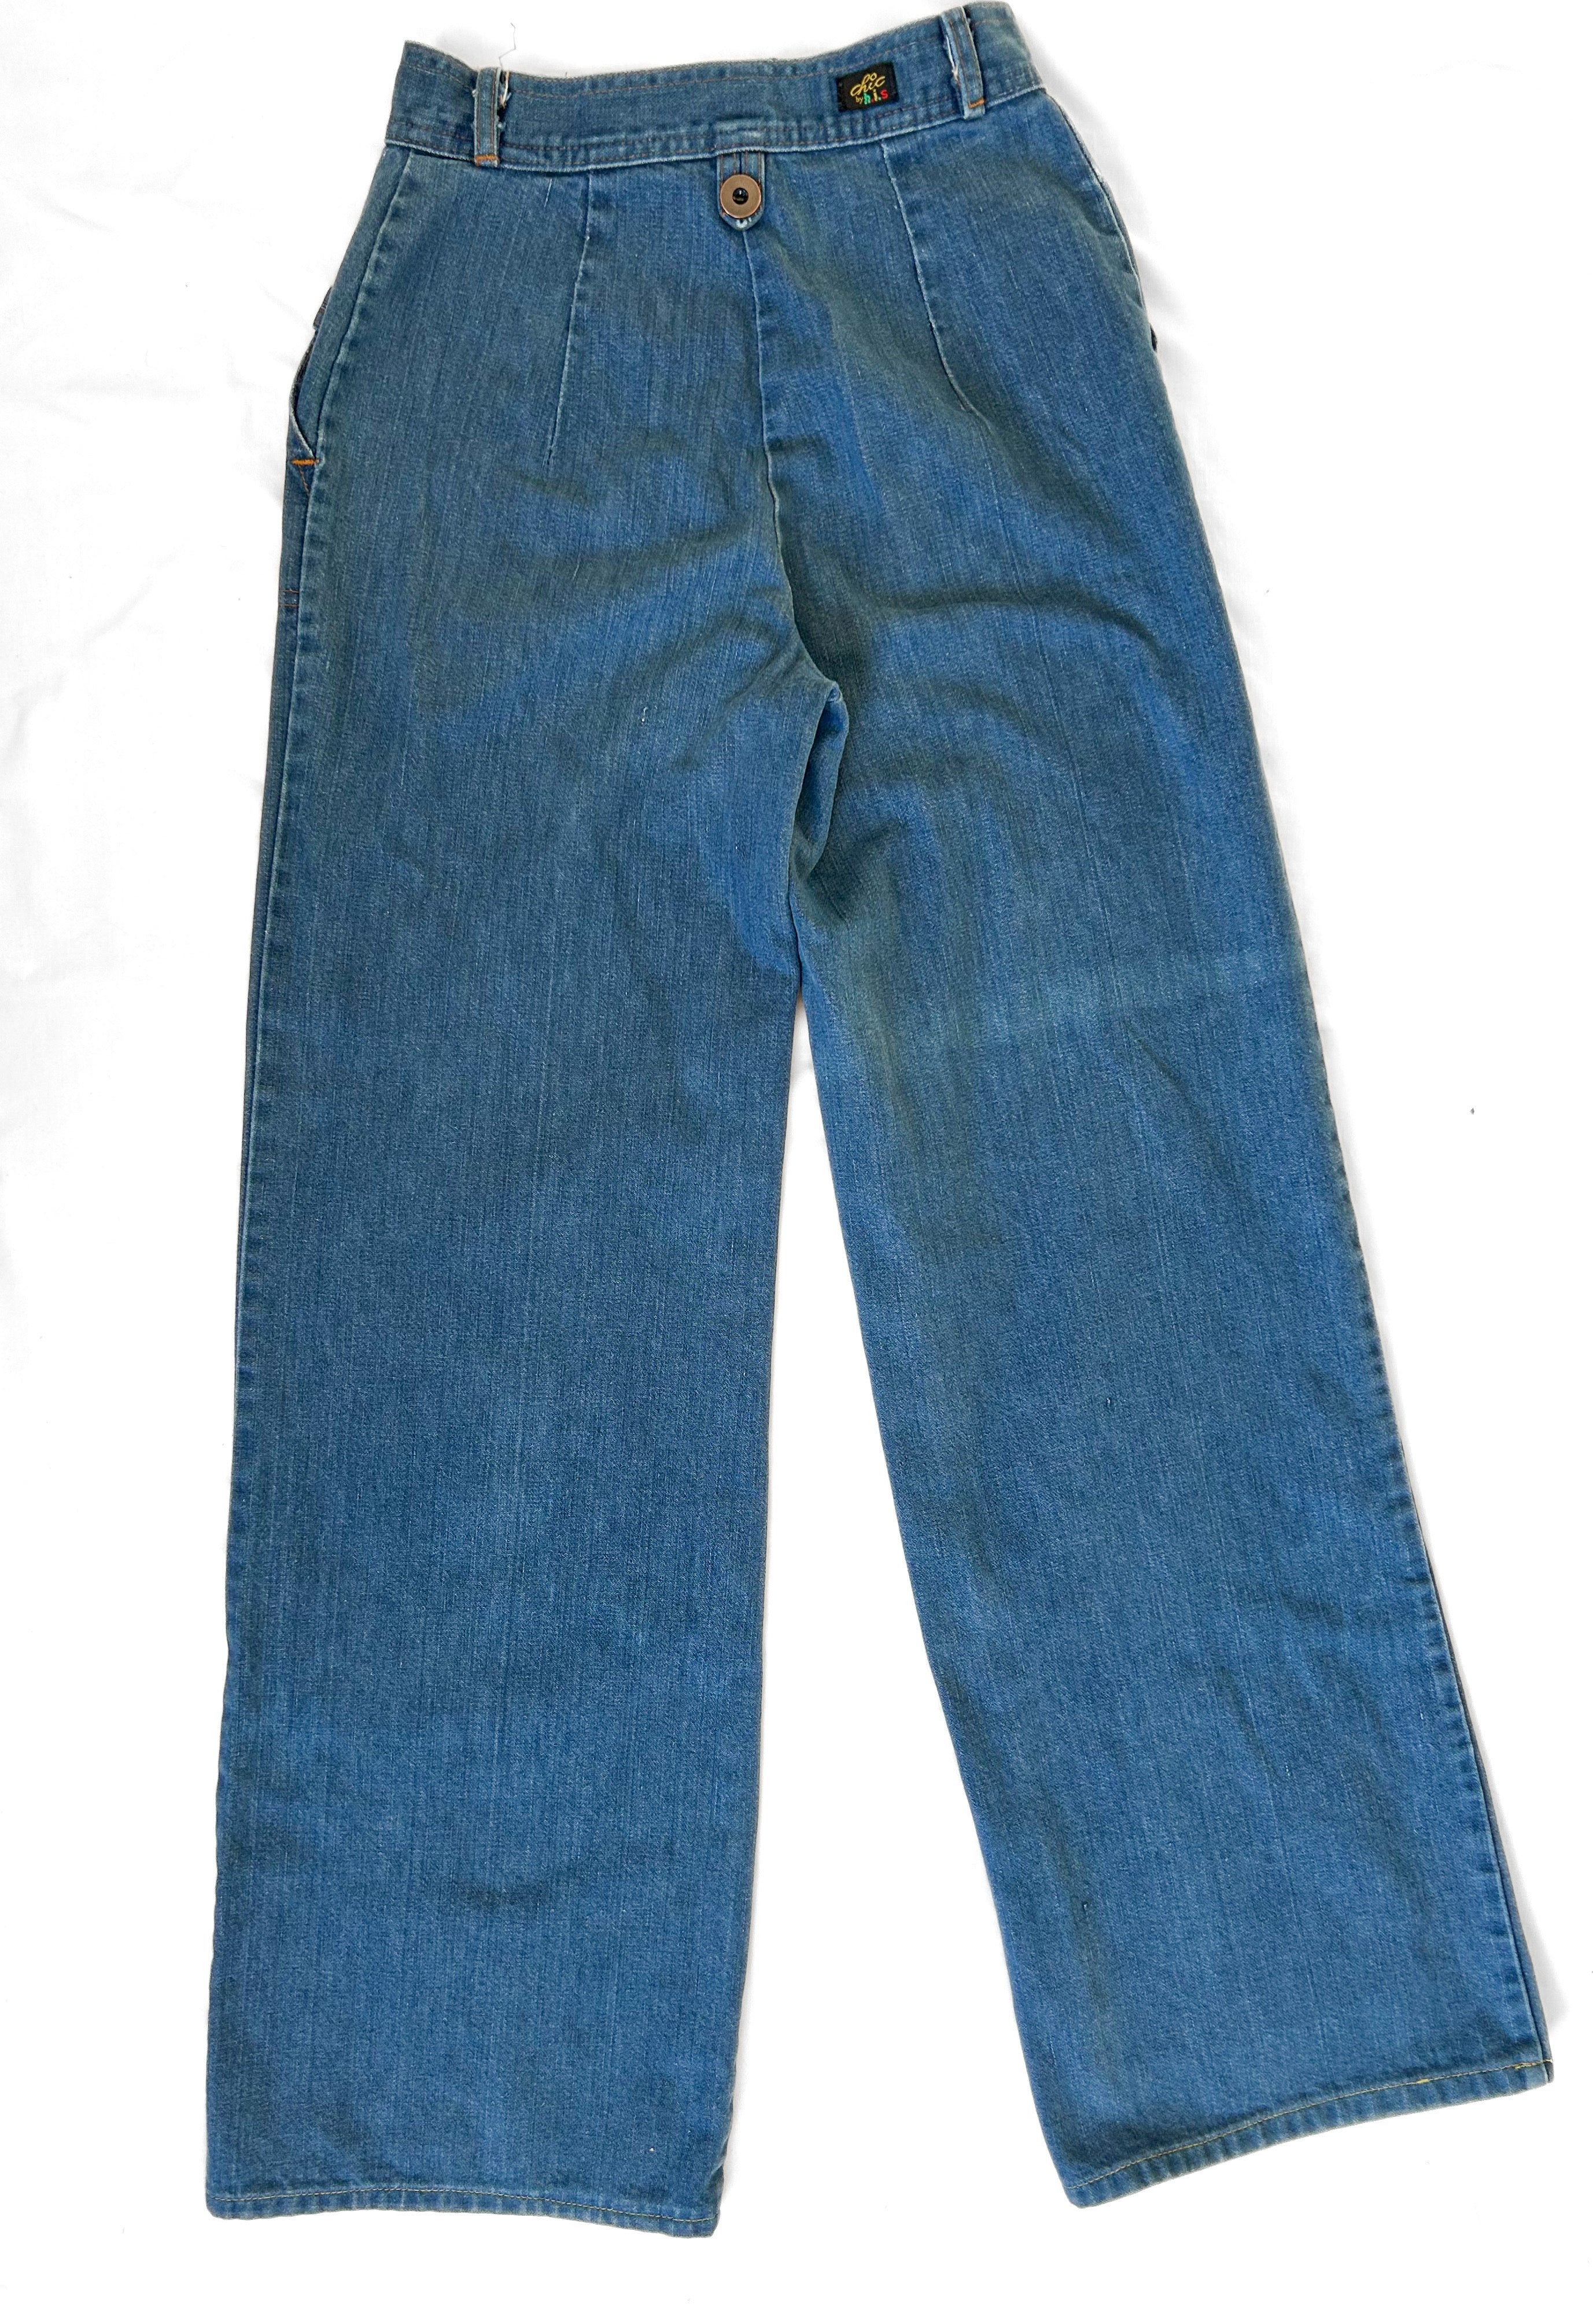 70s Vintage Jeans High Rise 25” Waist, Straight Leg Trouser Style Jeans